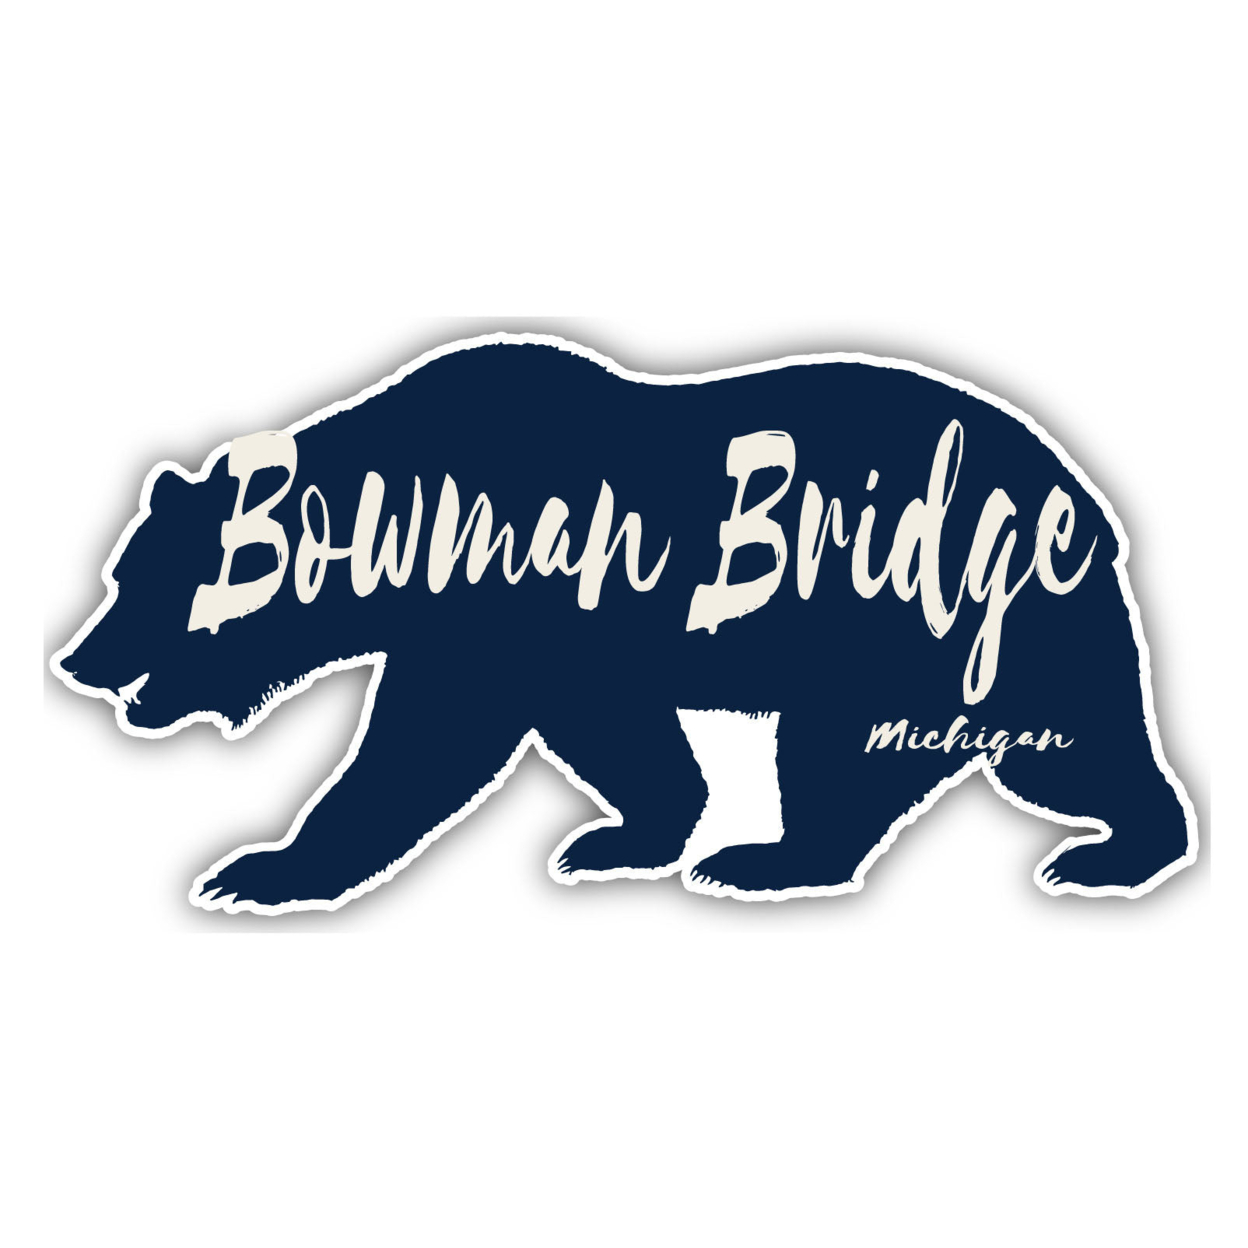 Bowman Bridge Michigan Souvenir Decorative Stickers (Choose Theme And Size) - 4-Pack, 12-Inch, Bear